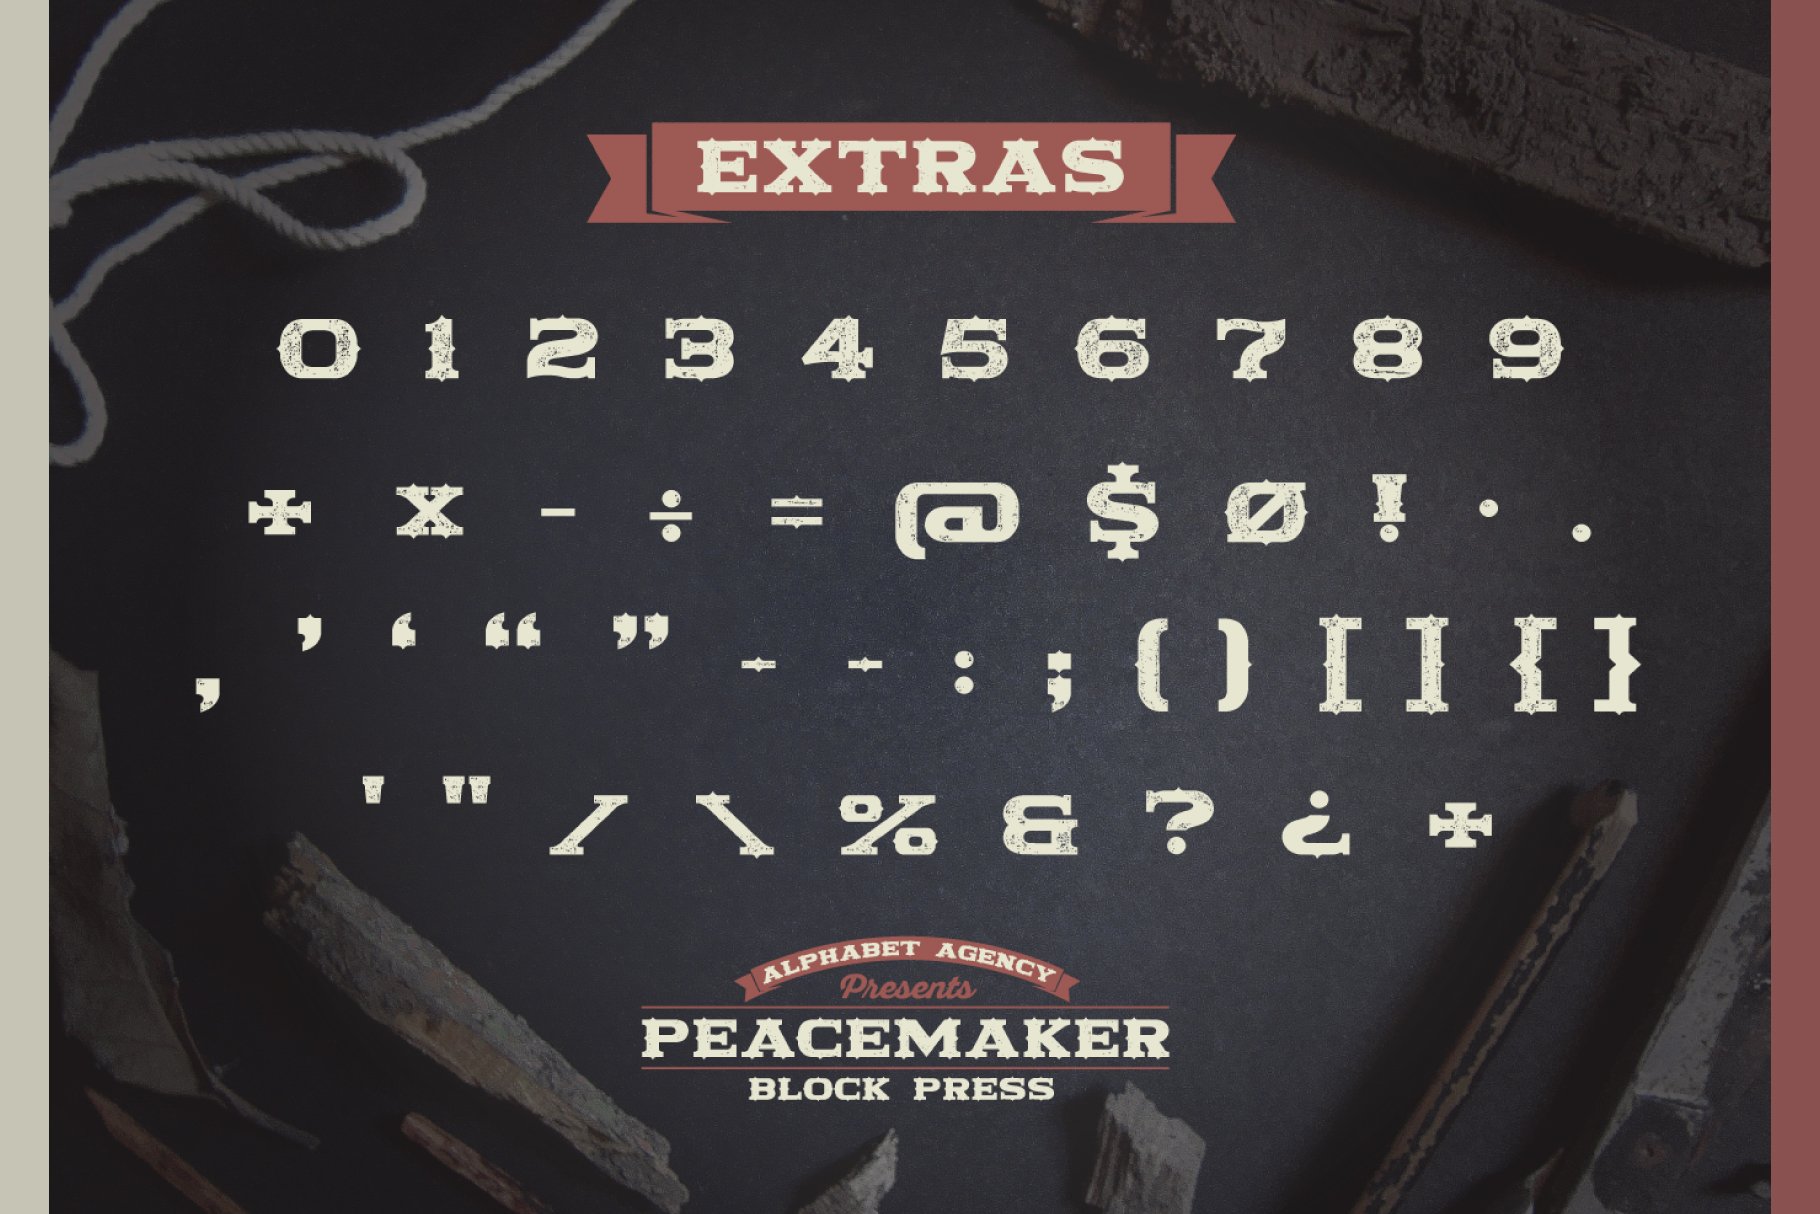 peacemaker blockpress extras1 902